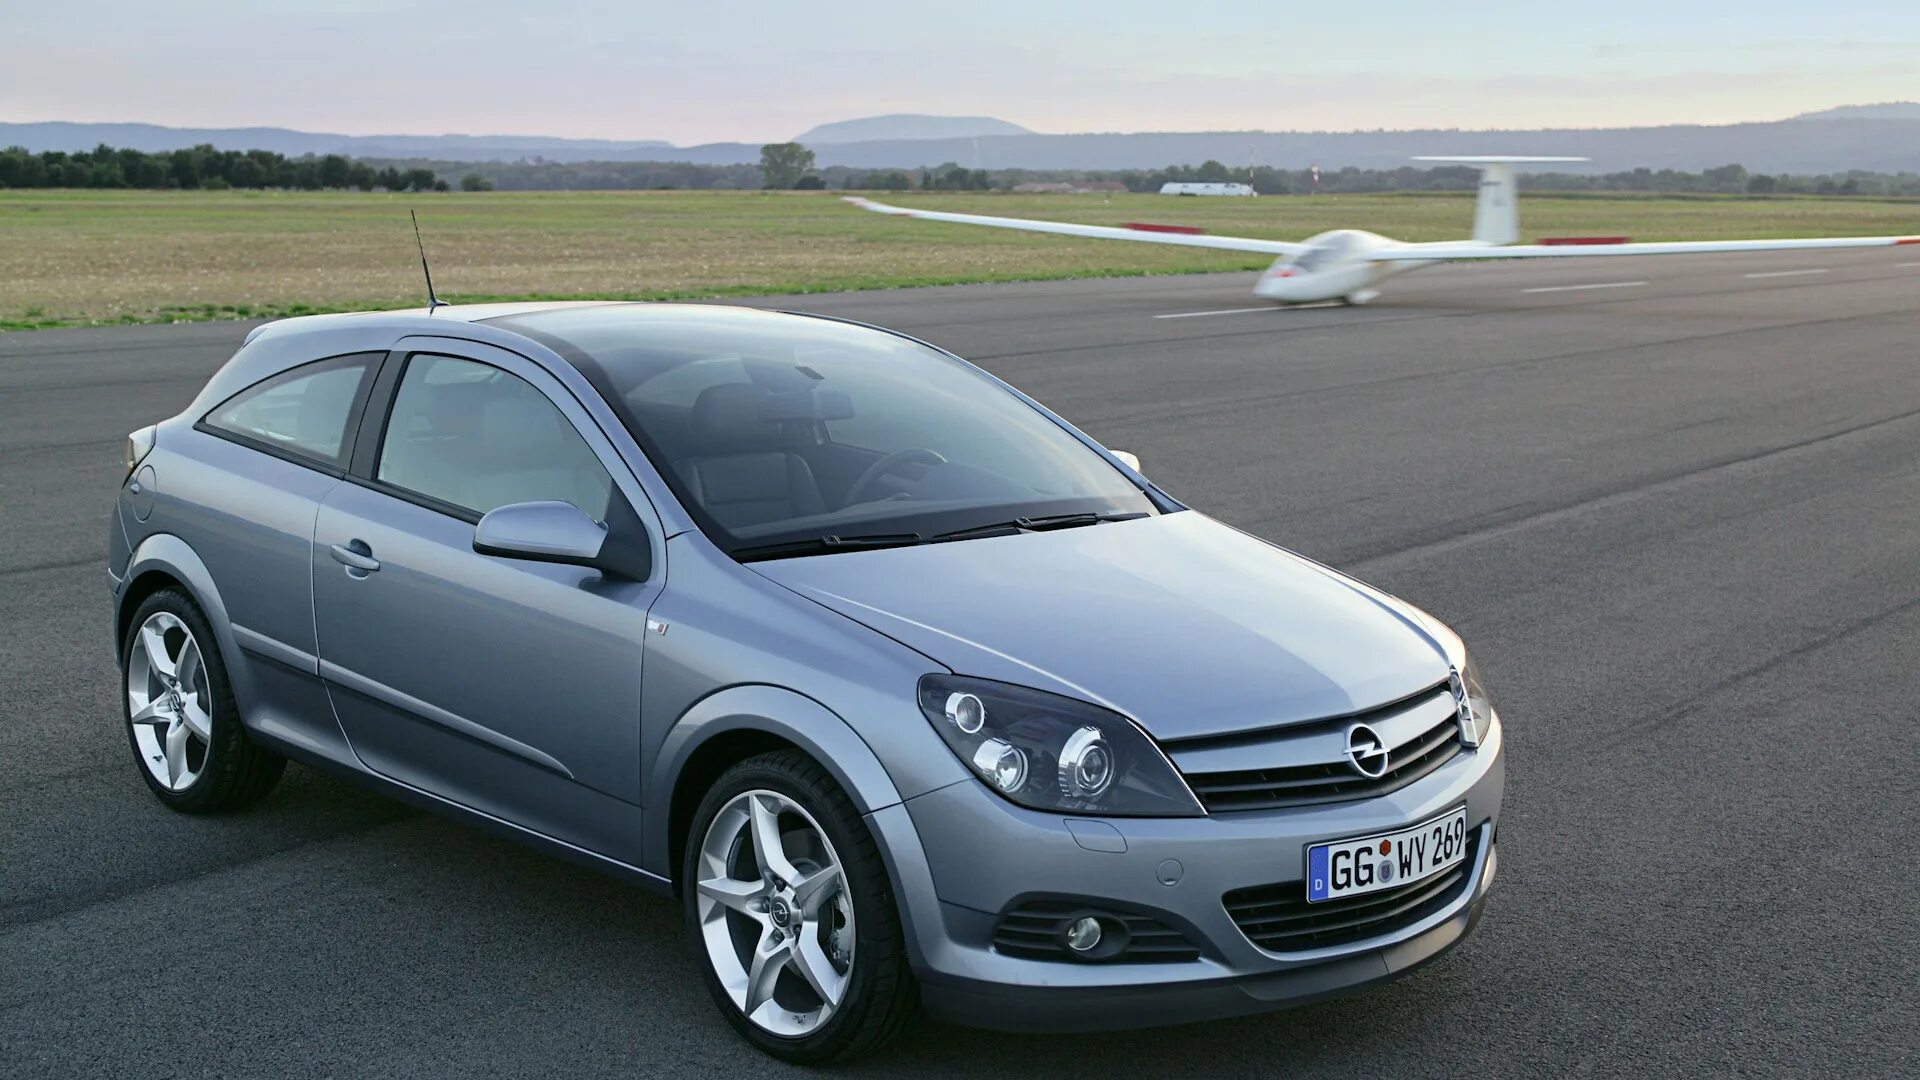 1.8 opel купить. Opel Astra h GTC. Opel Asrrah. Opel Astra GTC H 1.8. Opel Astra h GTC 1.6.